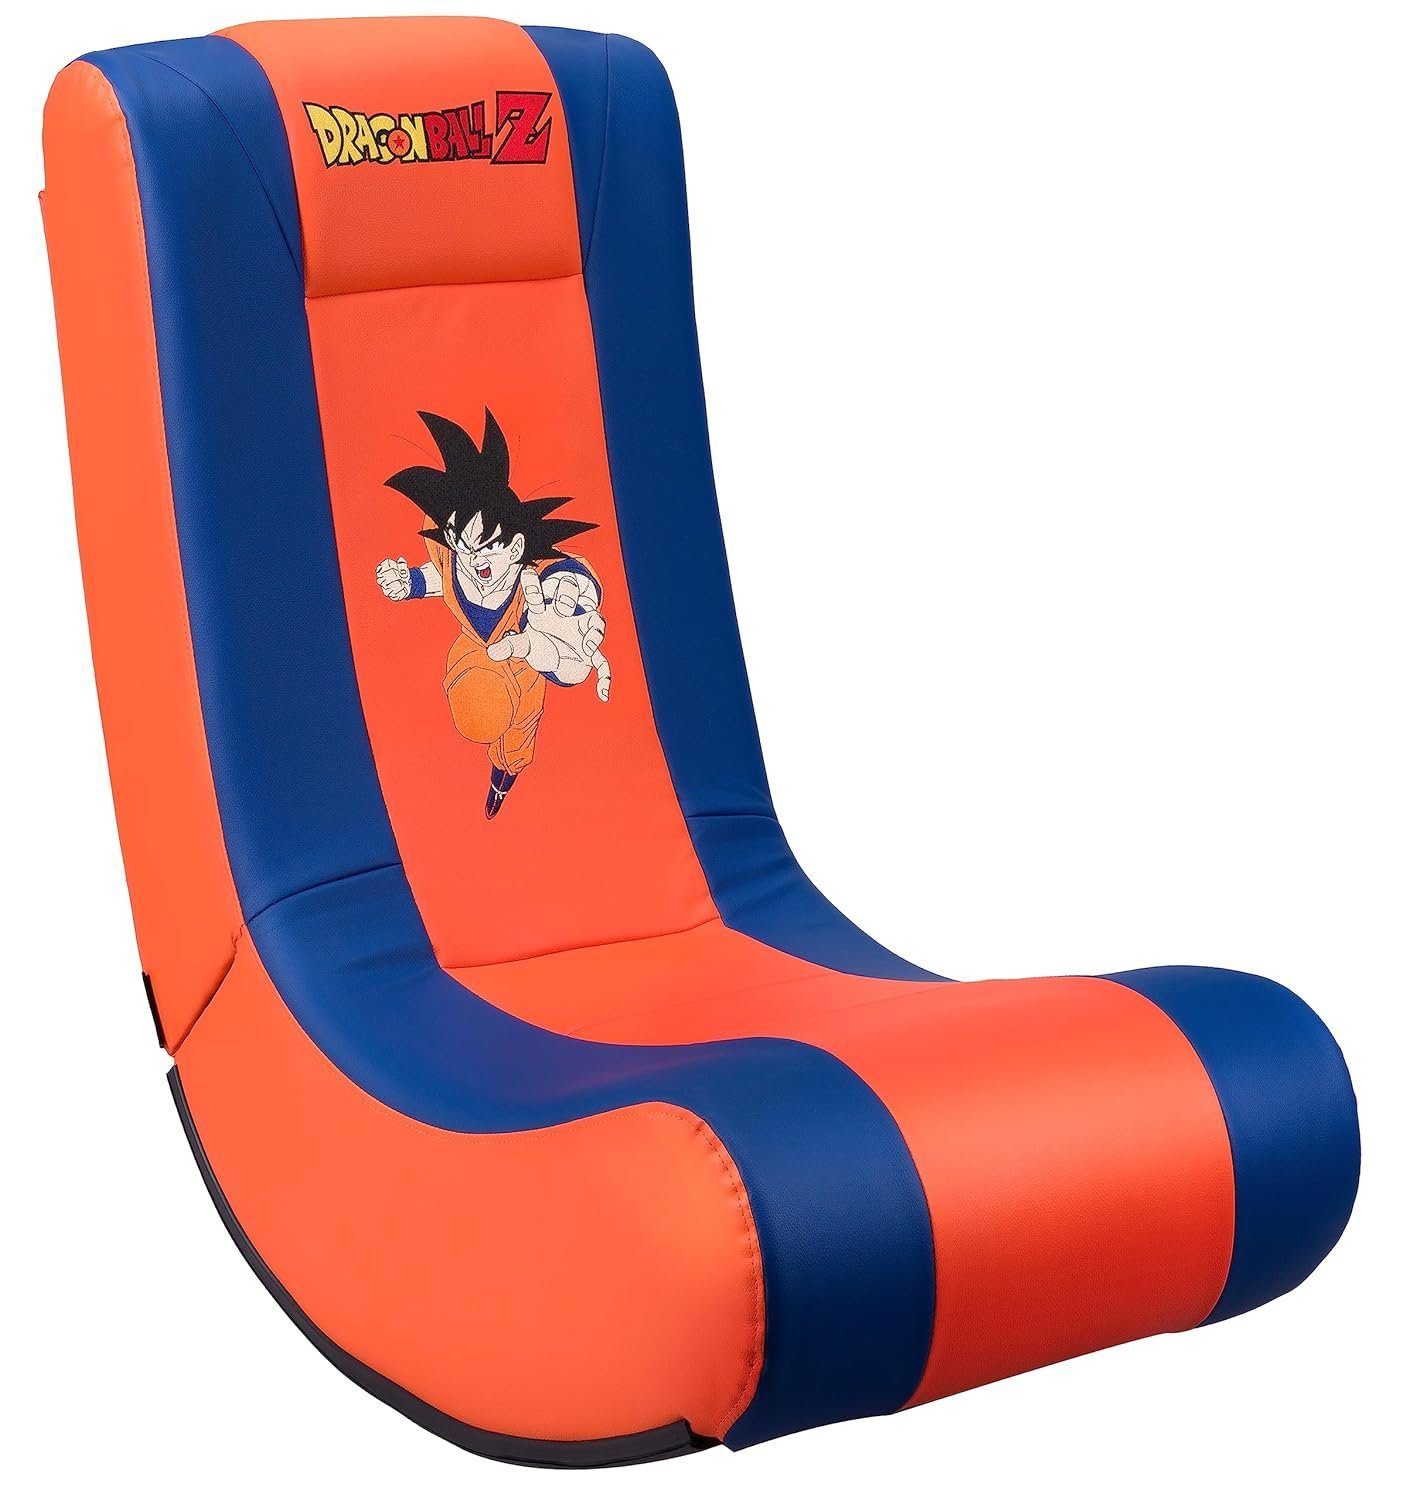 Subsonic Gaming-Stuhl Dragonball Z Stuhl Sessel / Rock'n'Seat St) (1 Chair / Junior Gaming